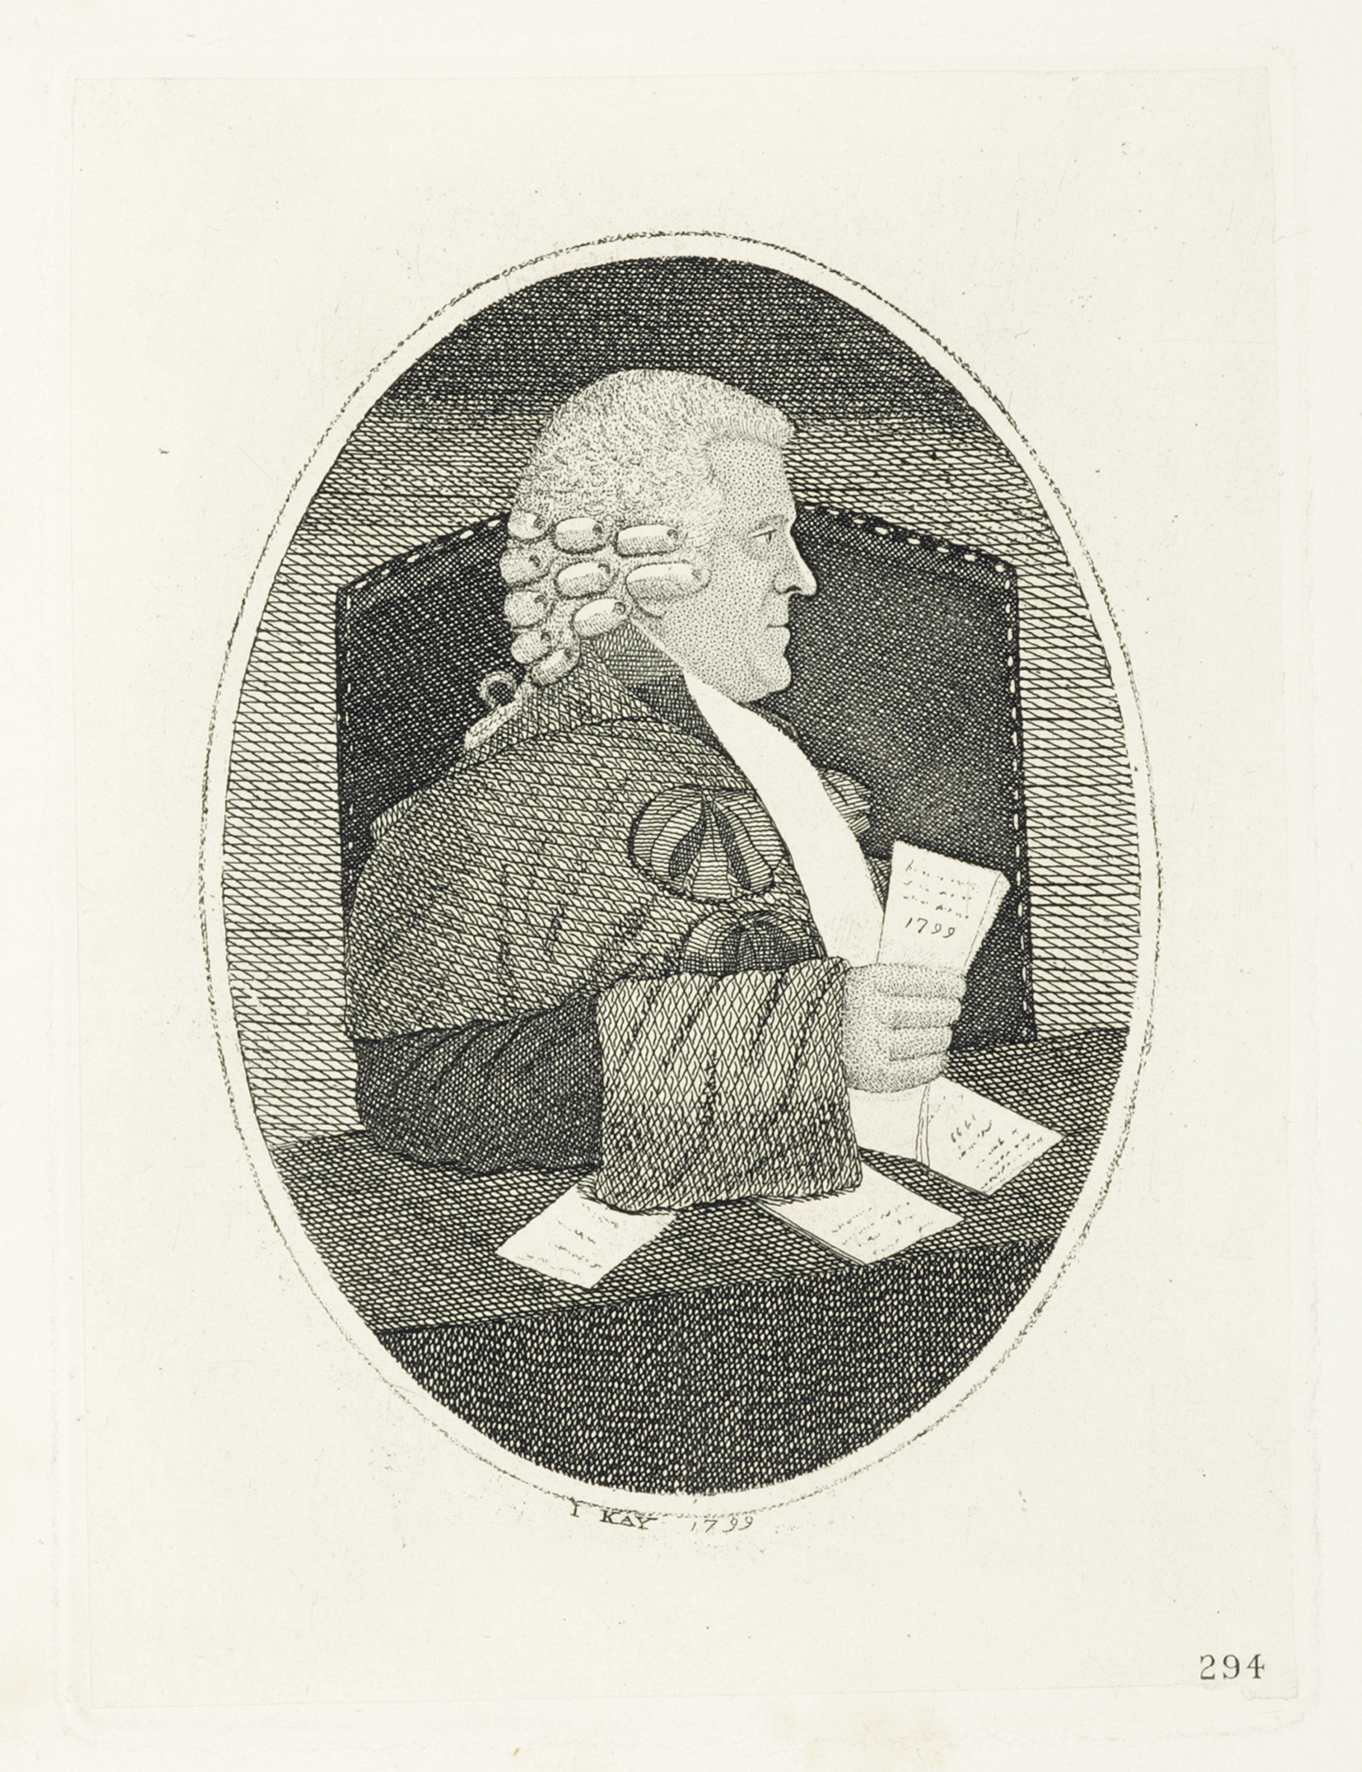 Sir William Macleod-Bannatyne, Lord Bannatyne. - Antique Print from 1799